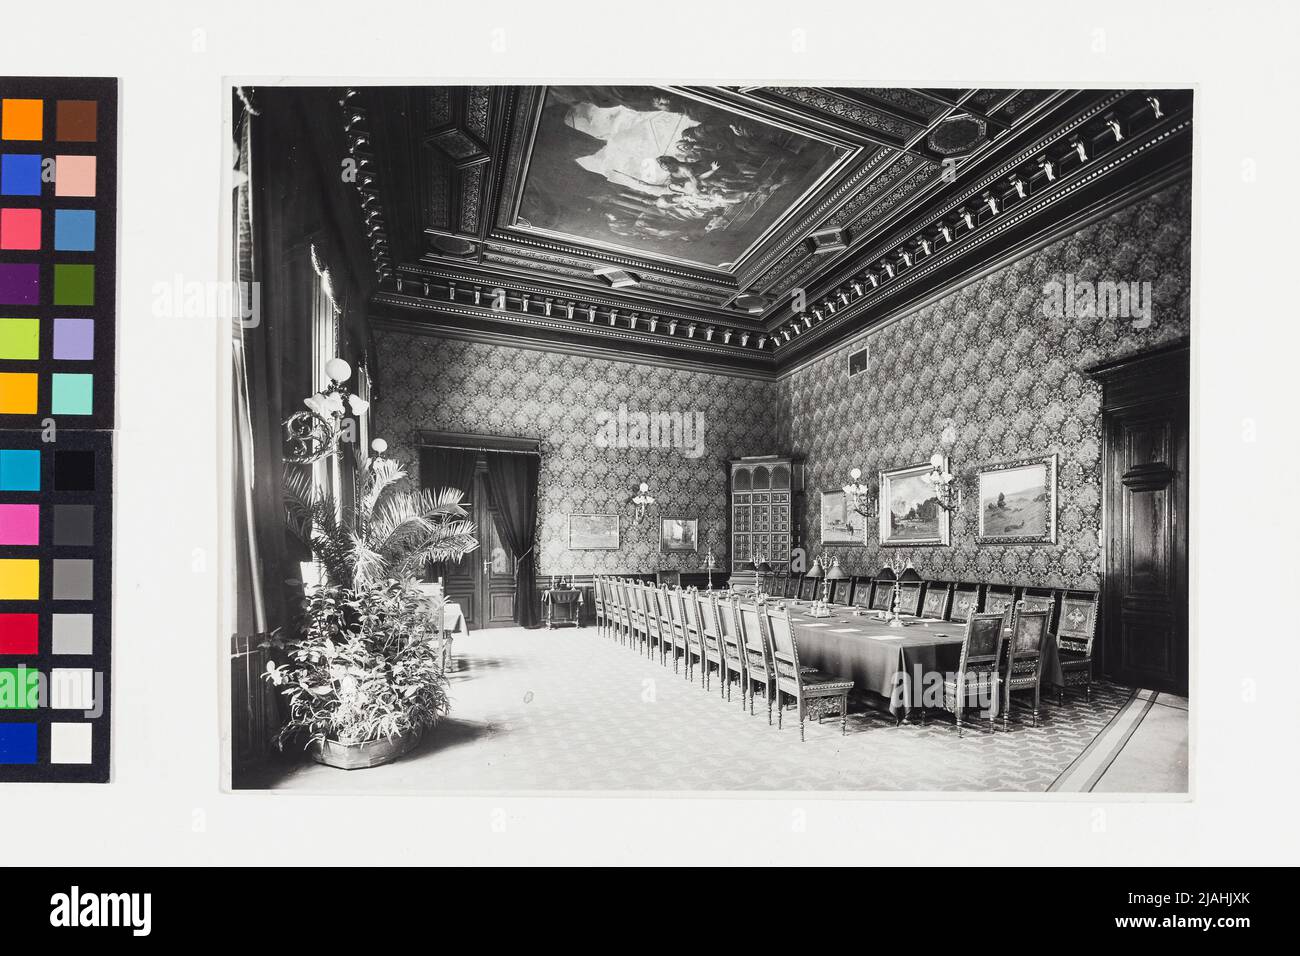 1st, Rathausplatz 1 - Rathaus - Vista interior - Estudio del alcalde - Salón Verde. Martin Gerlach jun. (1879-1944), fotógrafo Foto de stock